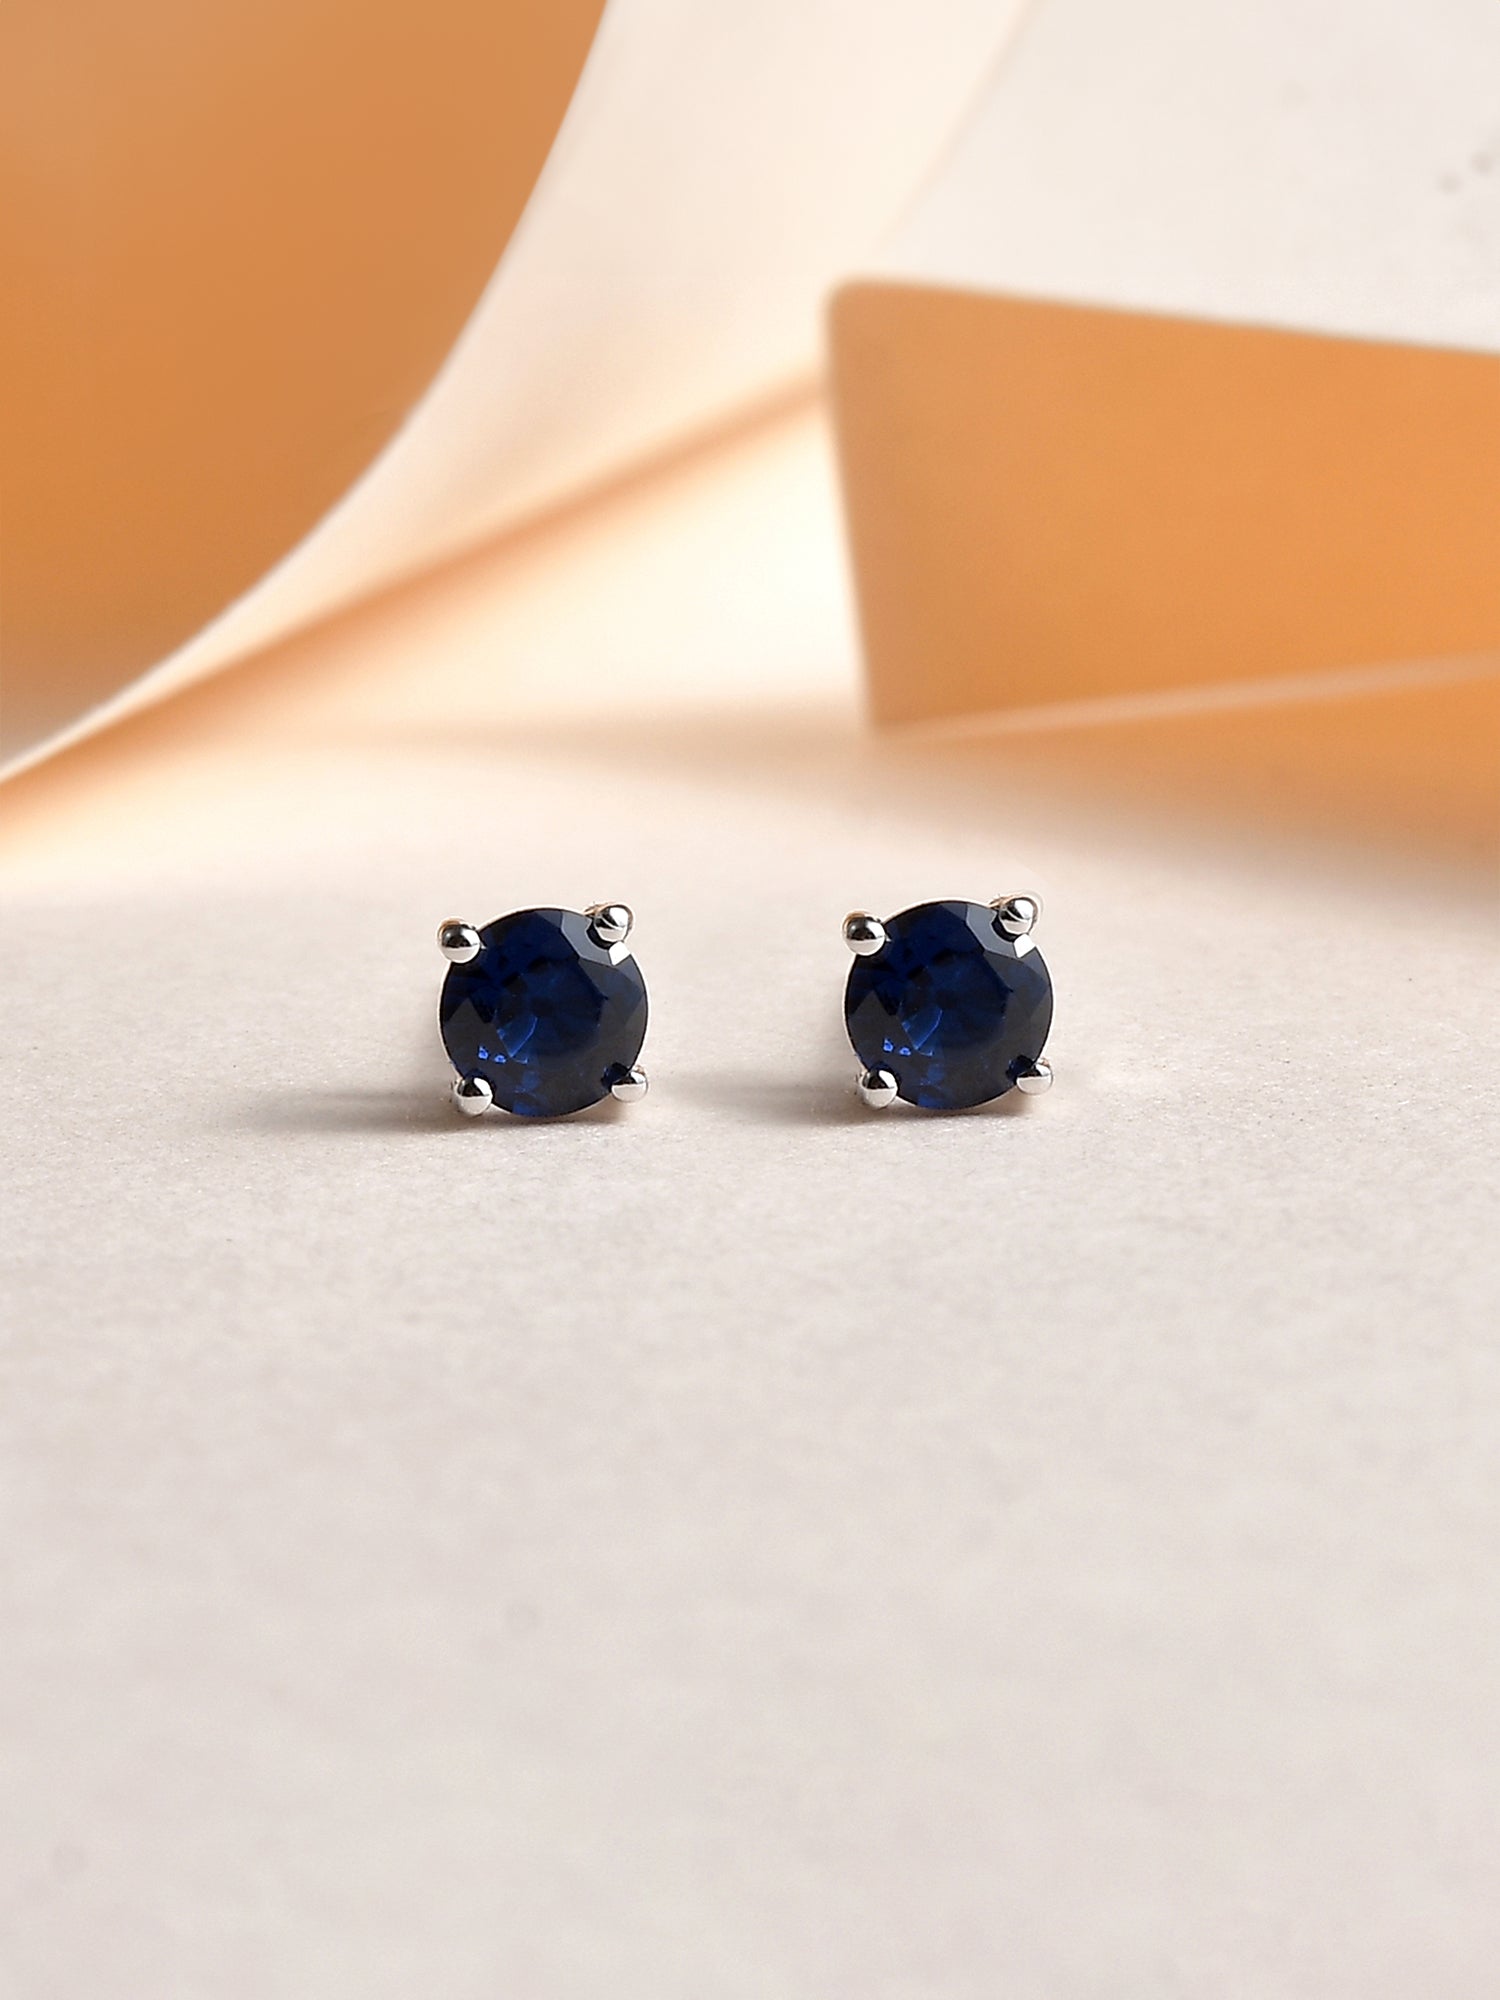 Blue Sapphire Daily Wear 4mm Solitaire Stud Earrings